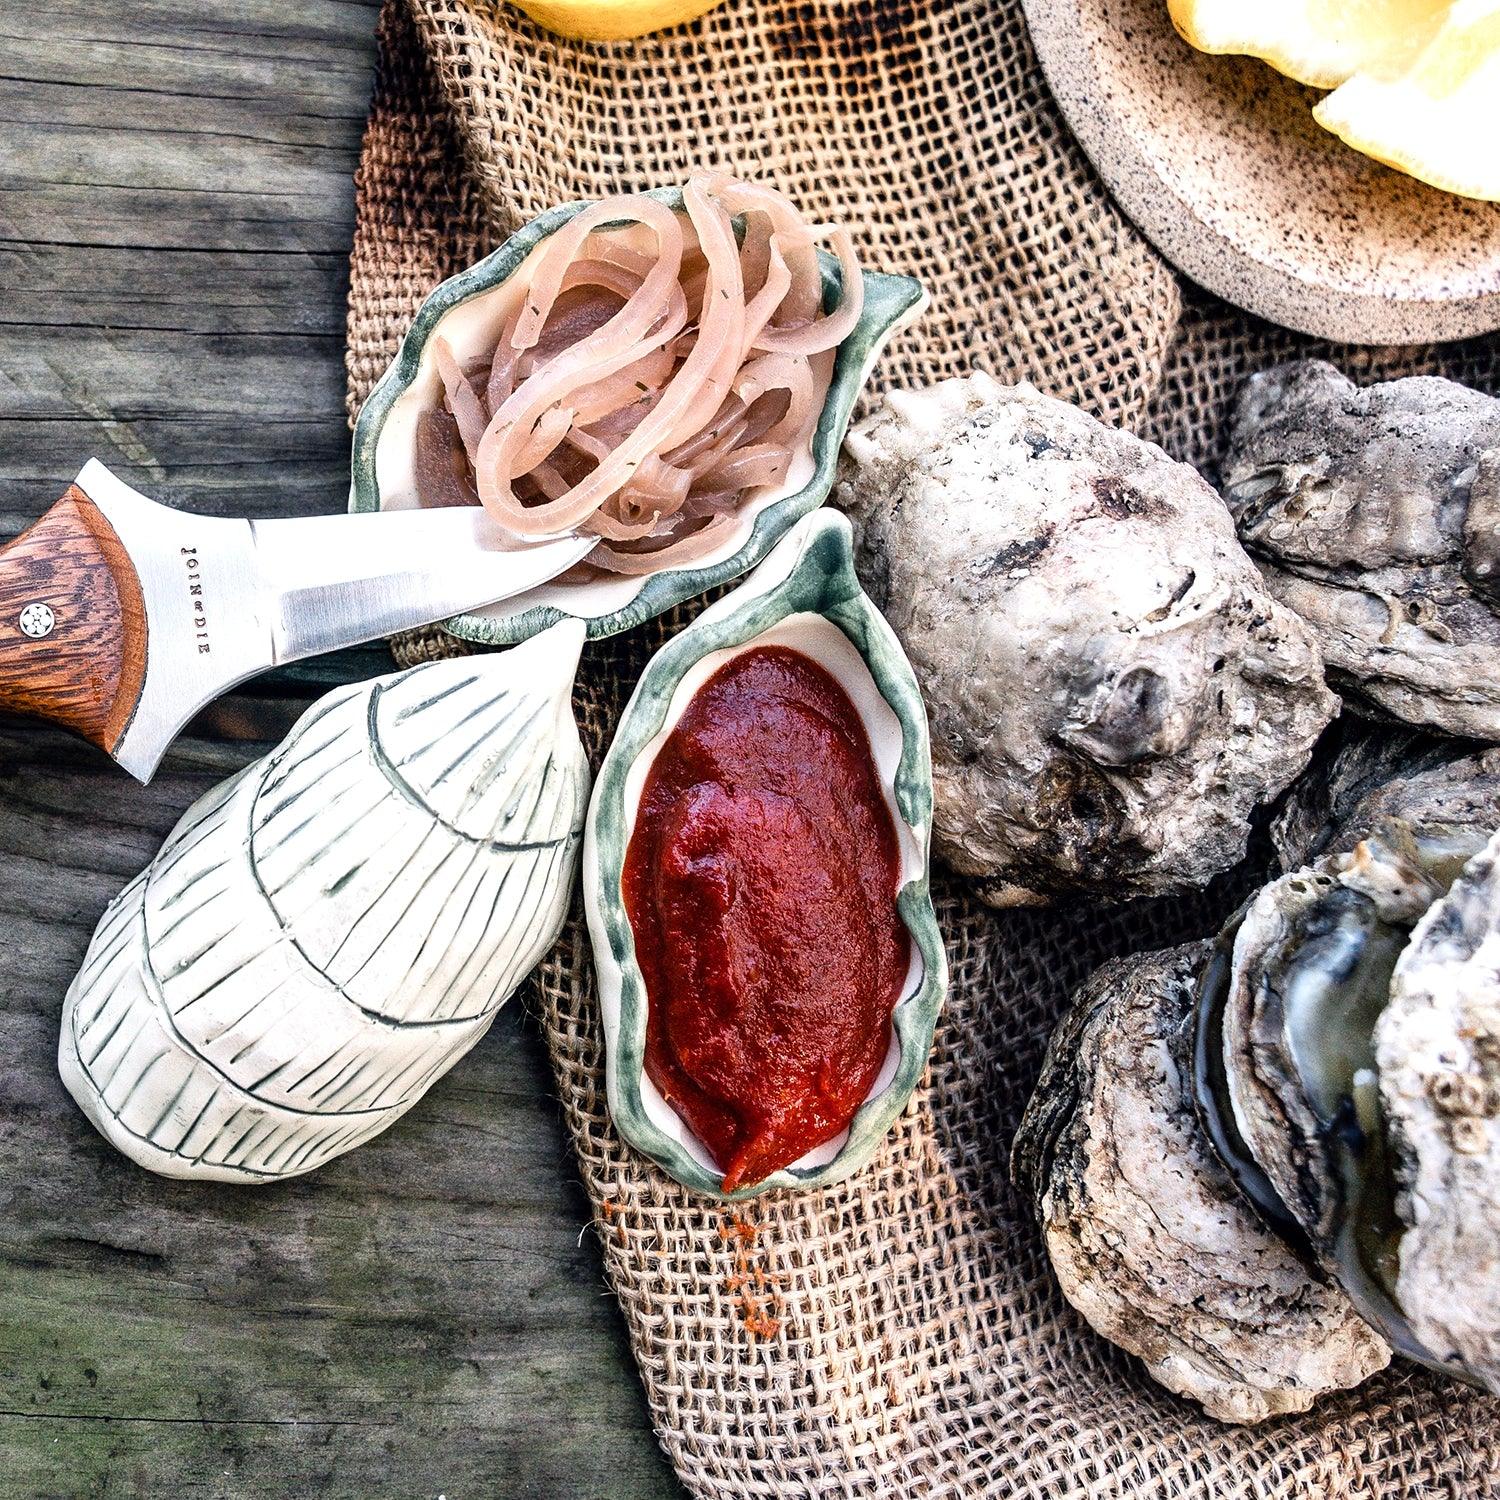 Porcelain Oyster Shells (food safe) - Southern Crafted